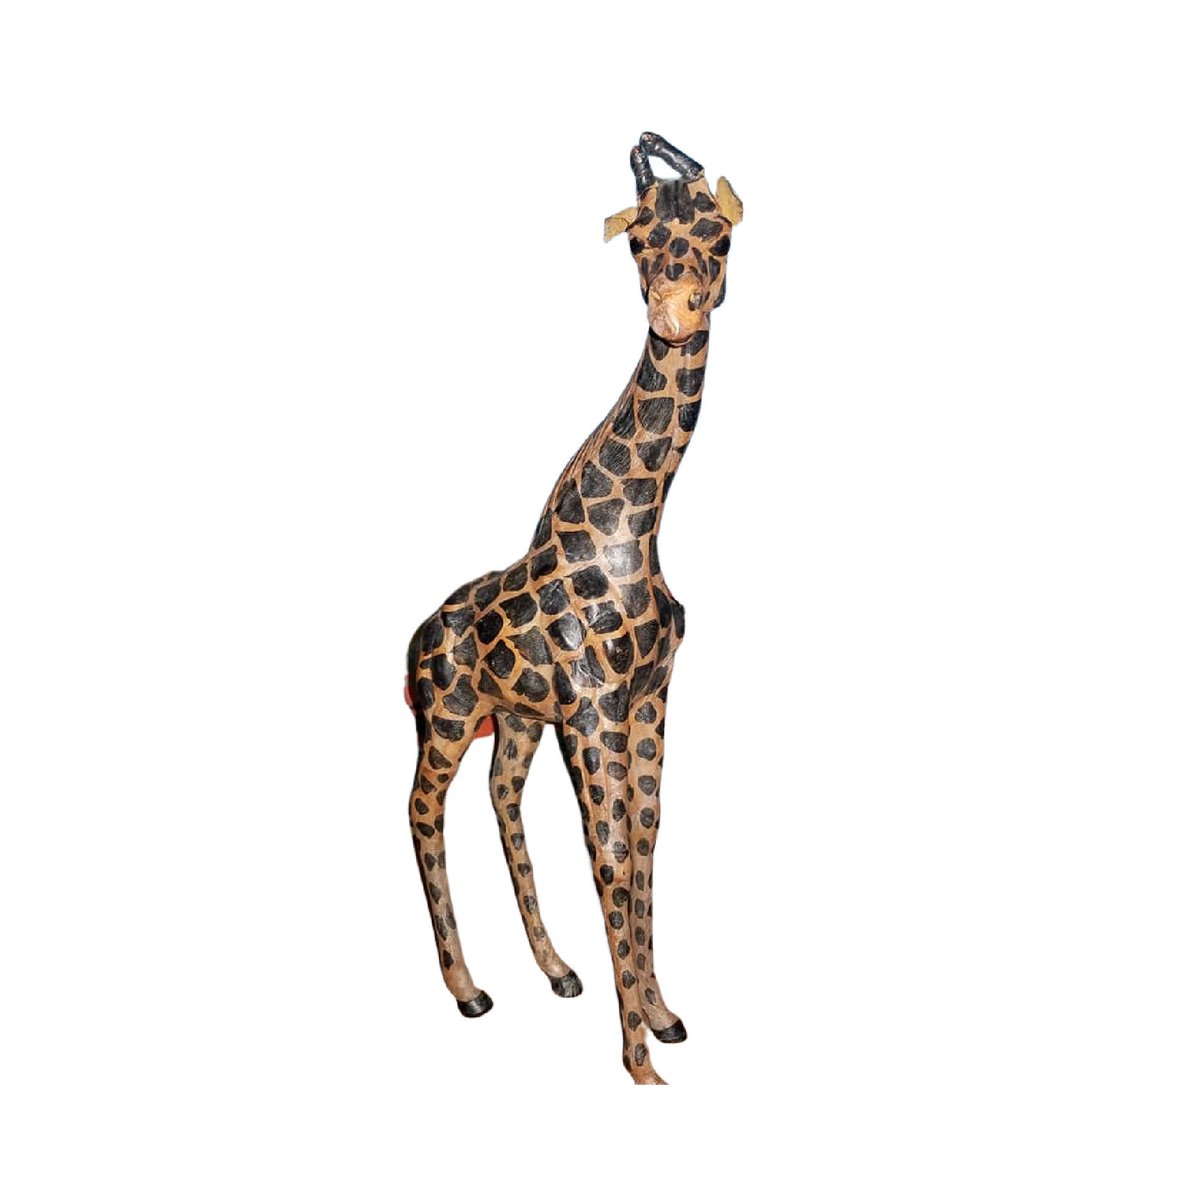 Vintage Leather Giraffe 16' Tall, Free Shipping tuppu.net/cefb9f56 #Etsy #JunkYardBlonde #SafariDecor